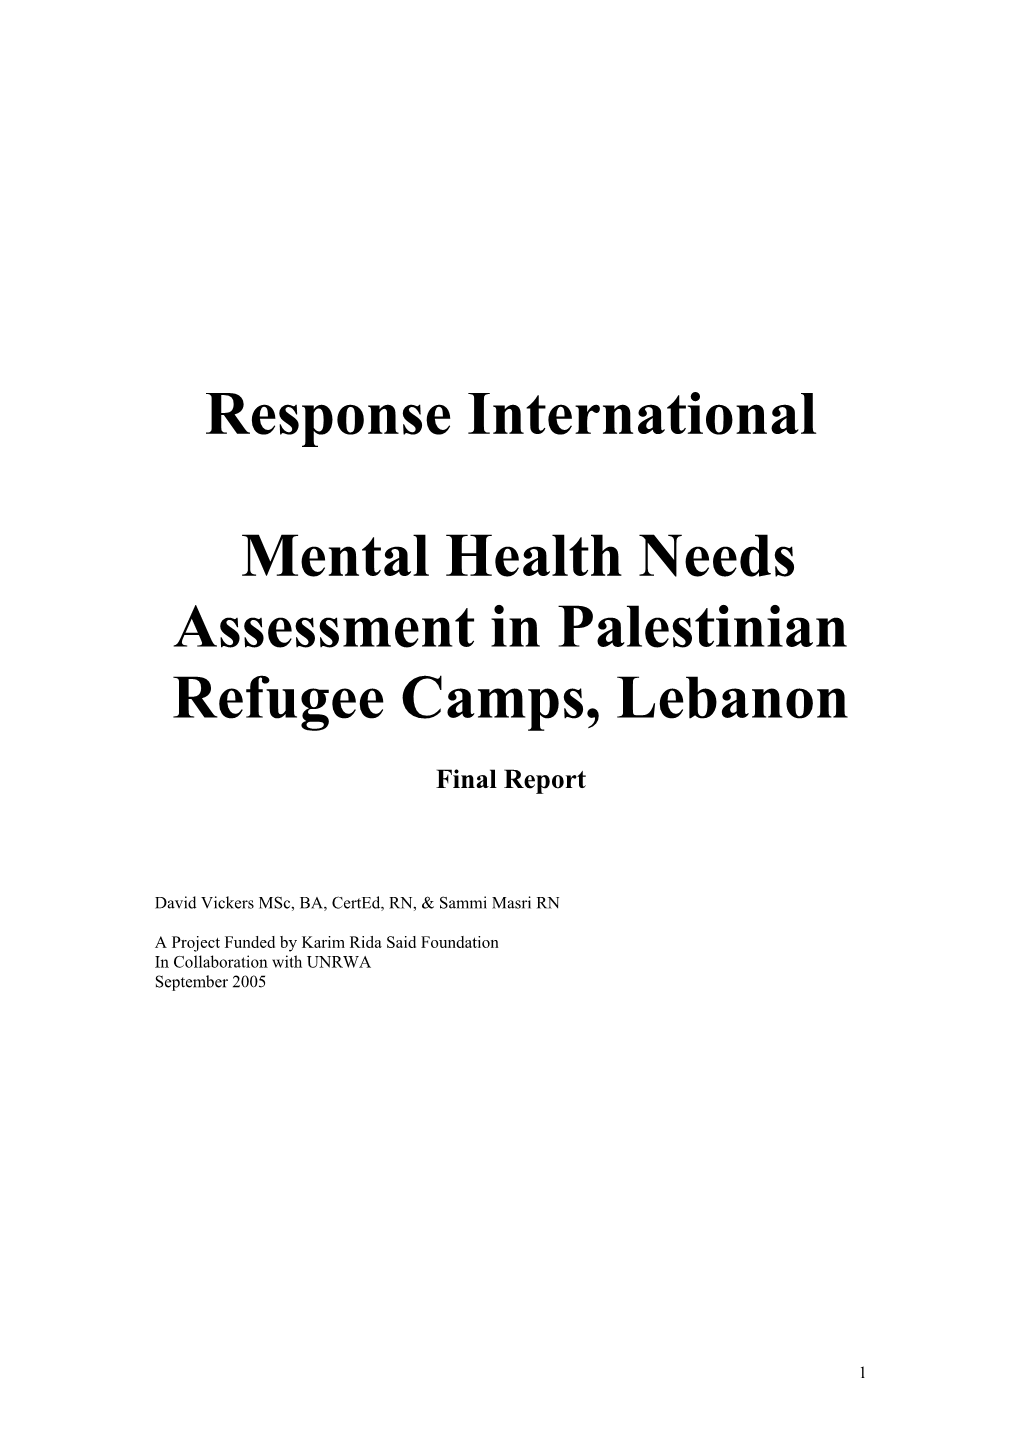 Response International Mental Health Needs Assessment in Palestinian